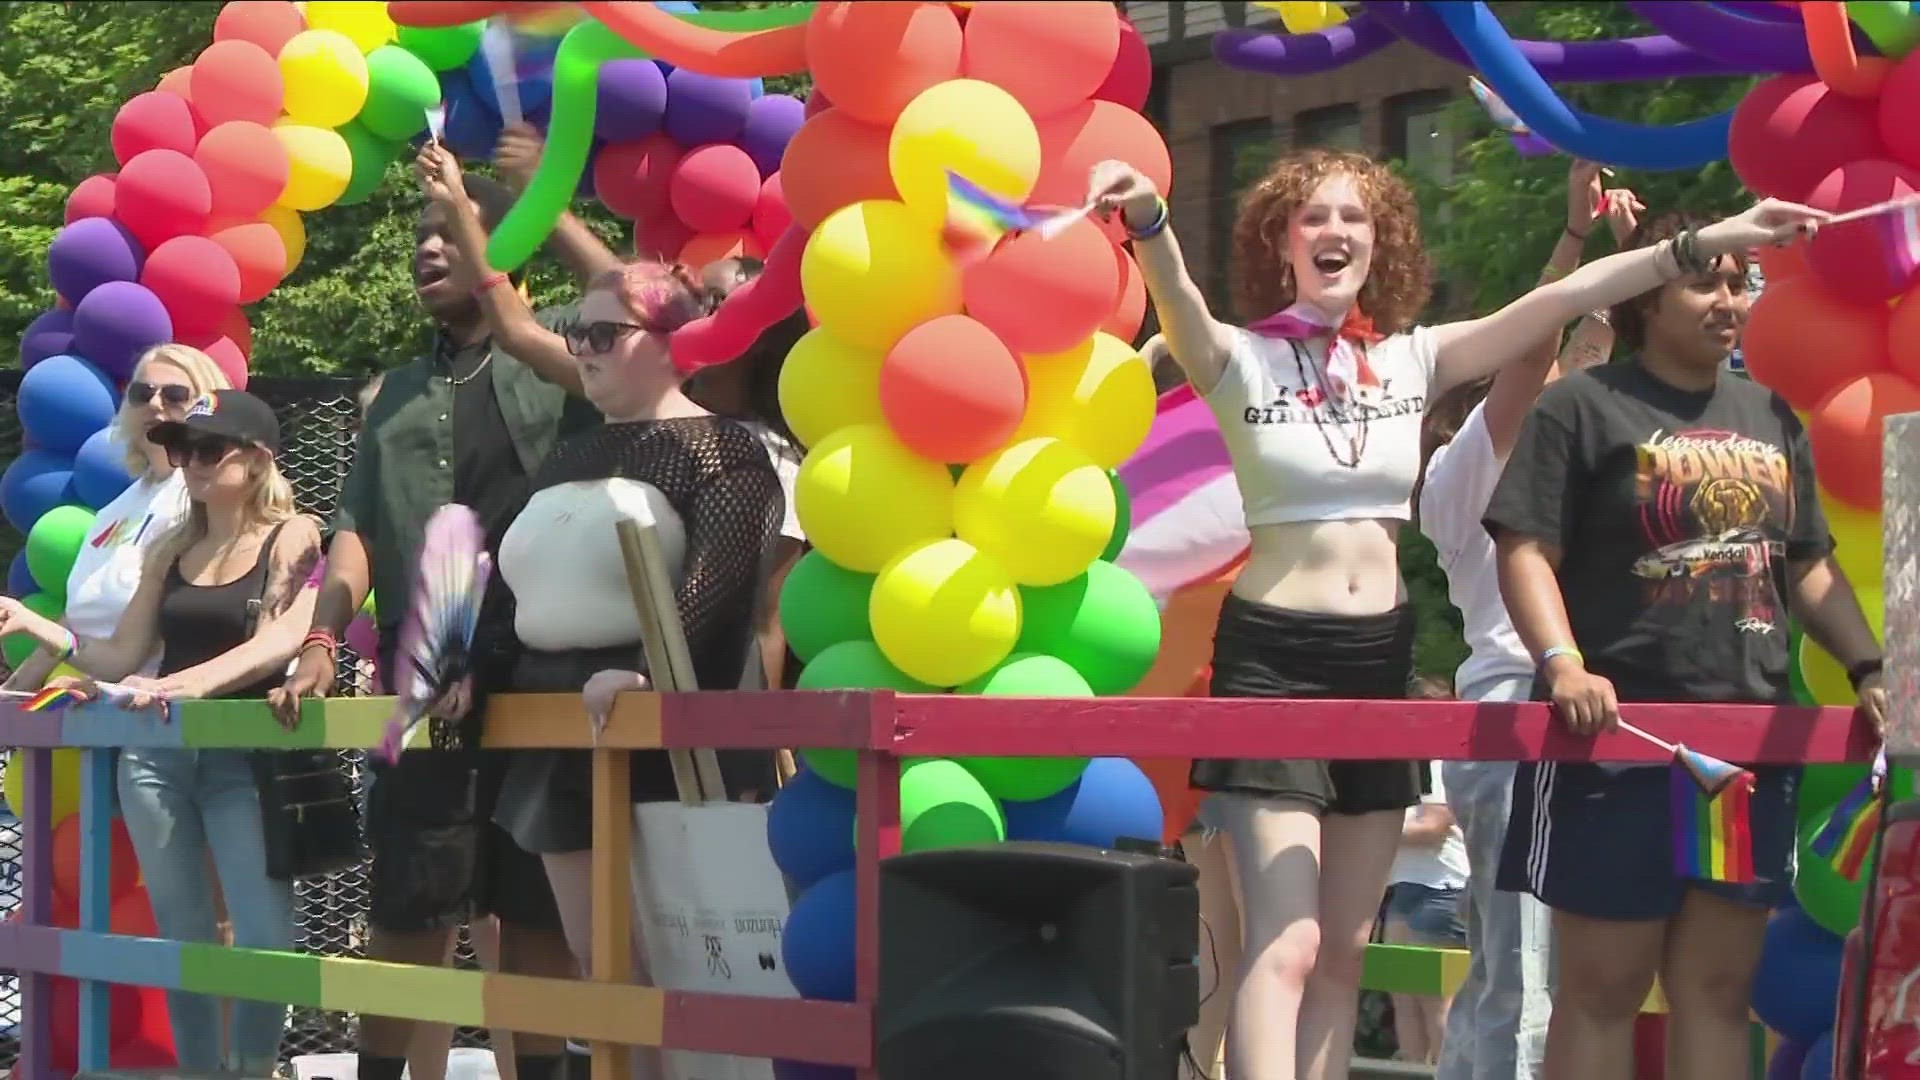 City of Buffalo celebrates Pride